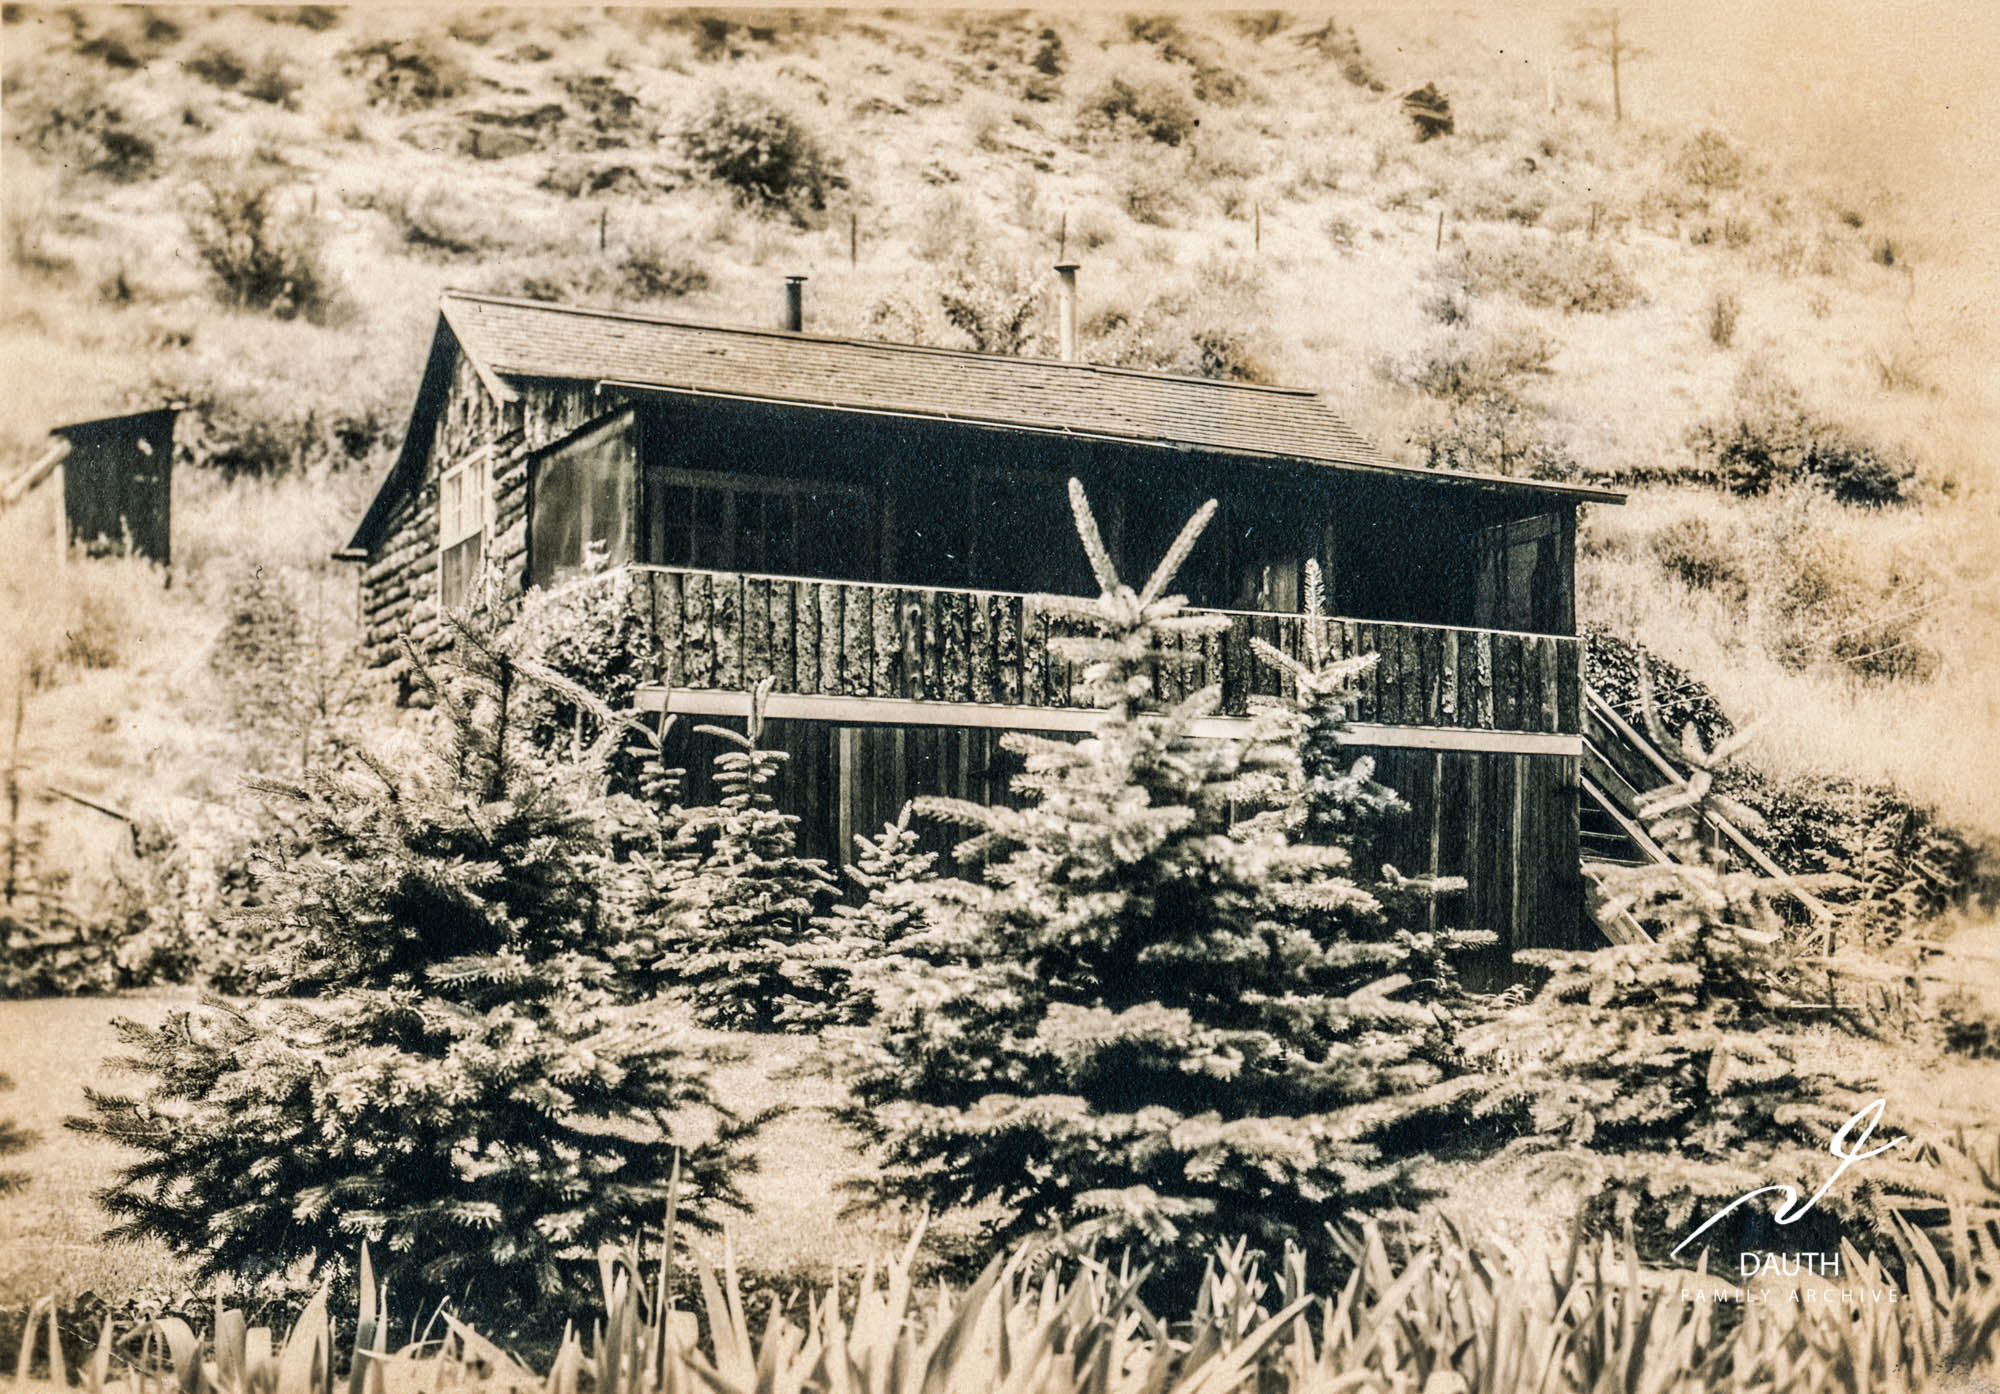 Idlewild Lodge - idlewildlodge.github.io - Circa 1929 - DAMFINO II - Looking south towards George Dauth's seco